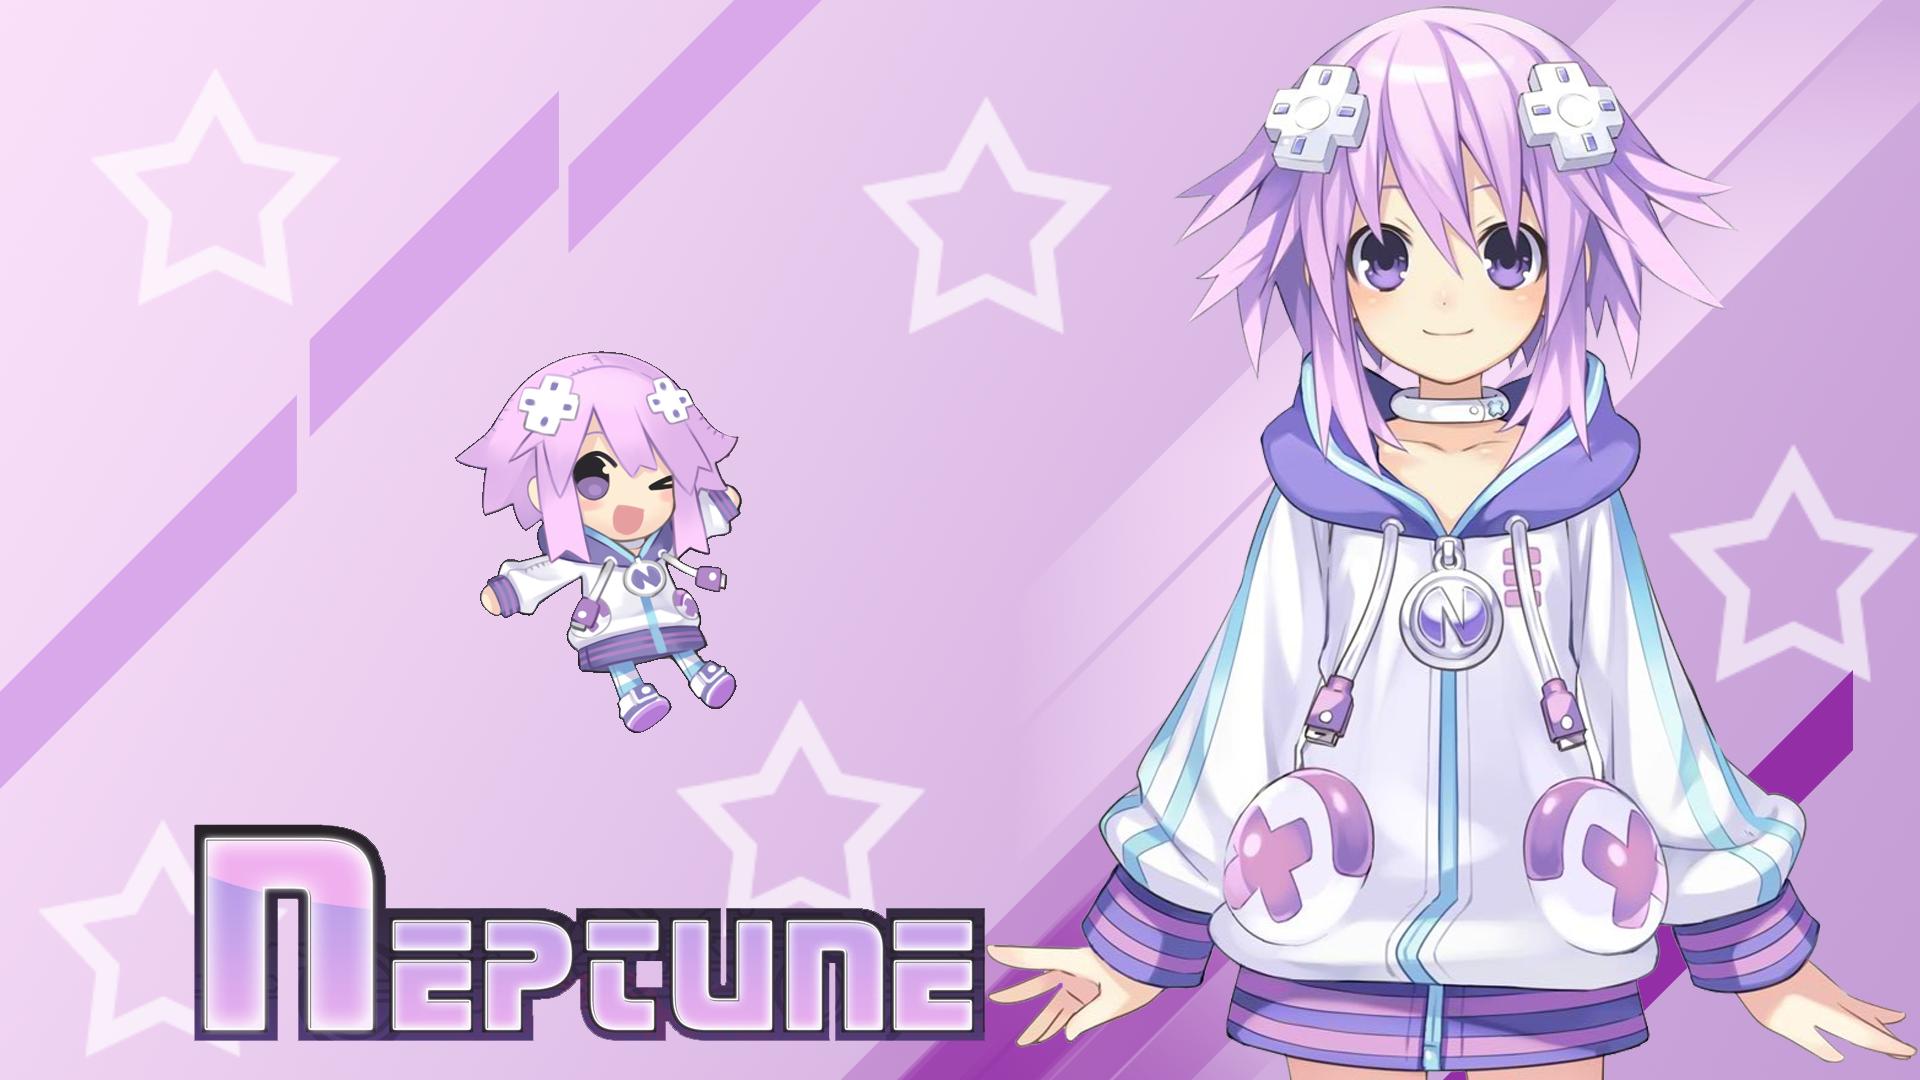 Video Game Hyperdimension Neptunia HD Wallpaper | Background Image